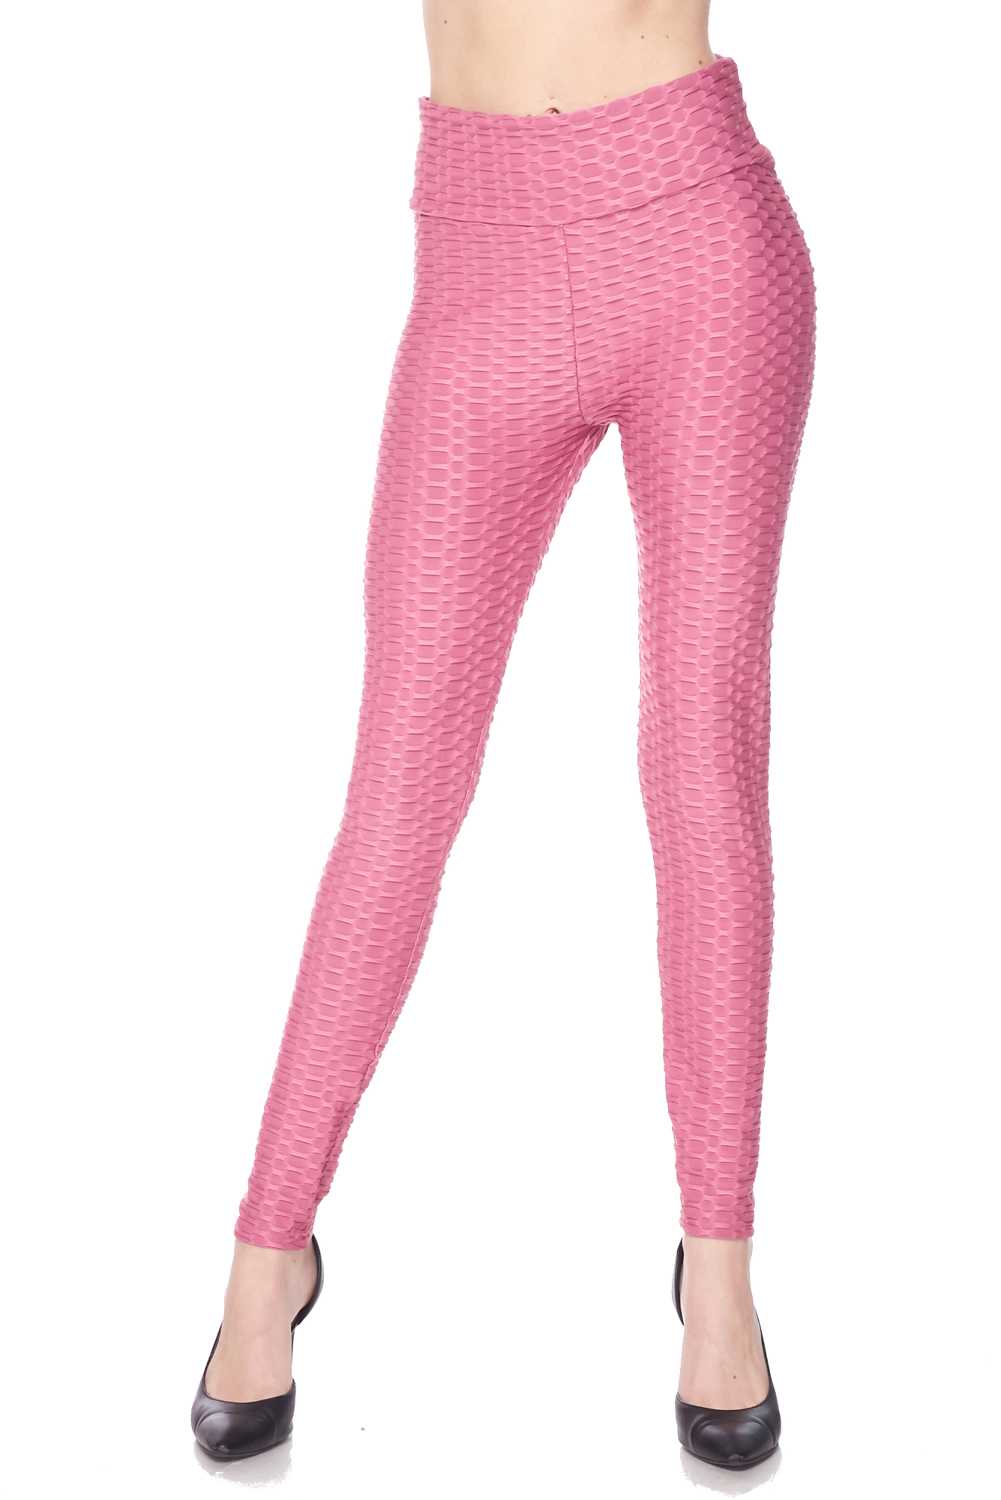 Echt scrunch Highwaisted leggings  High waisted leggings, Pink booties,  Leggings shop